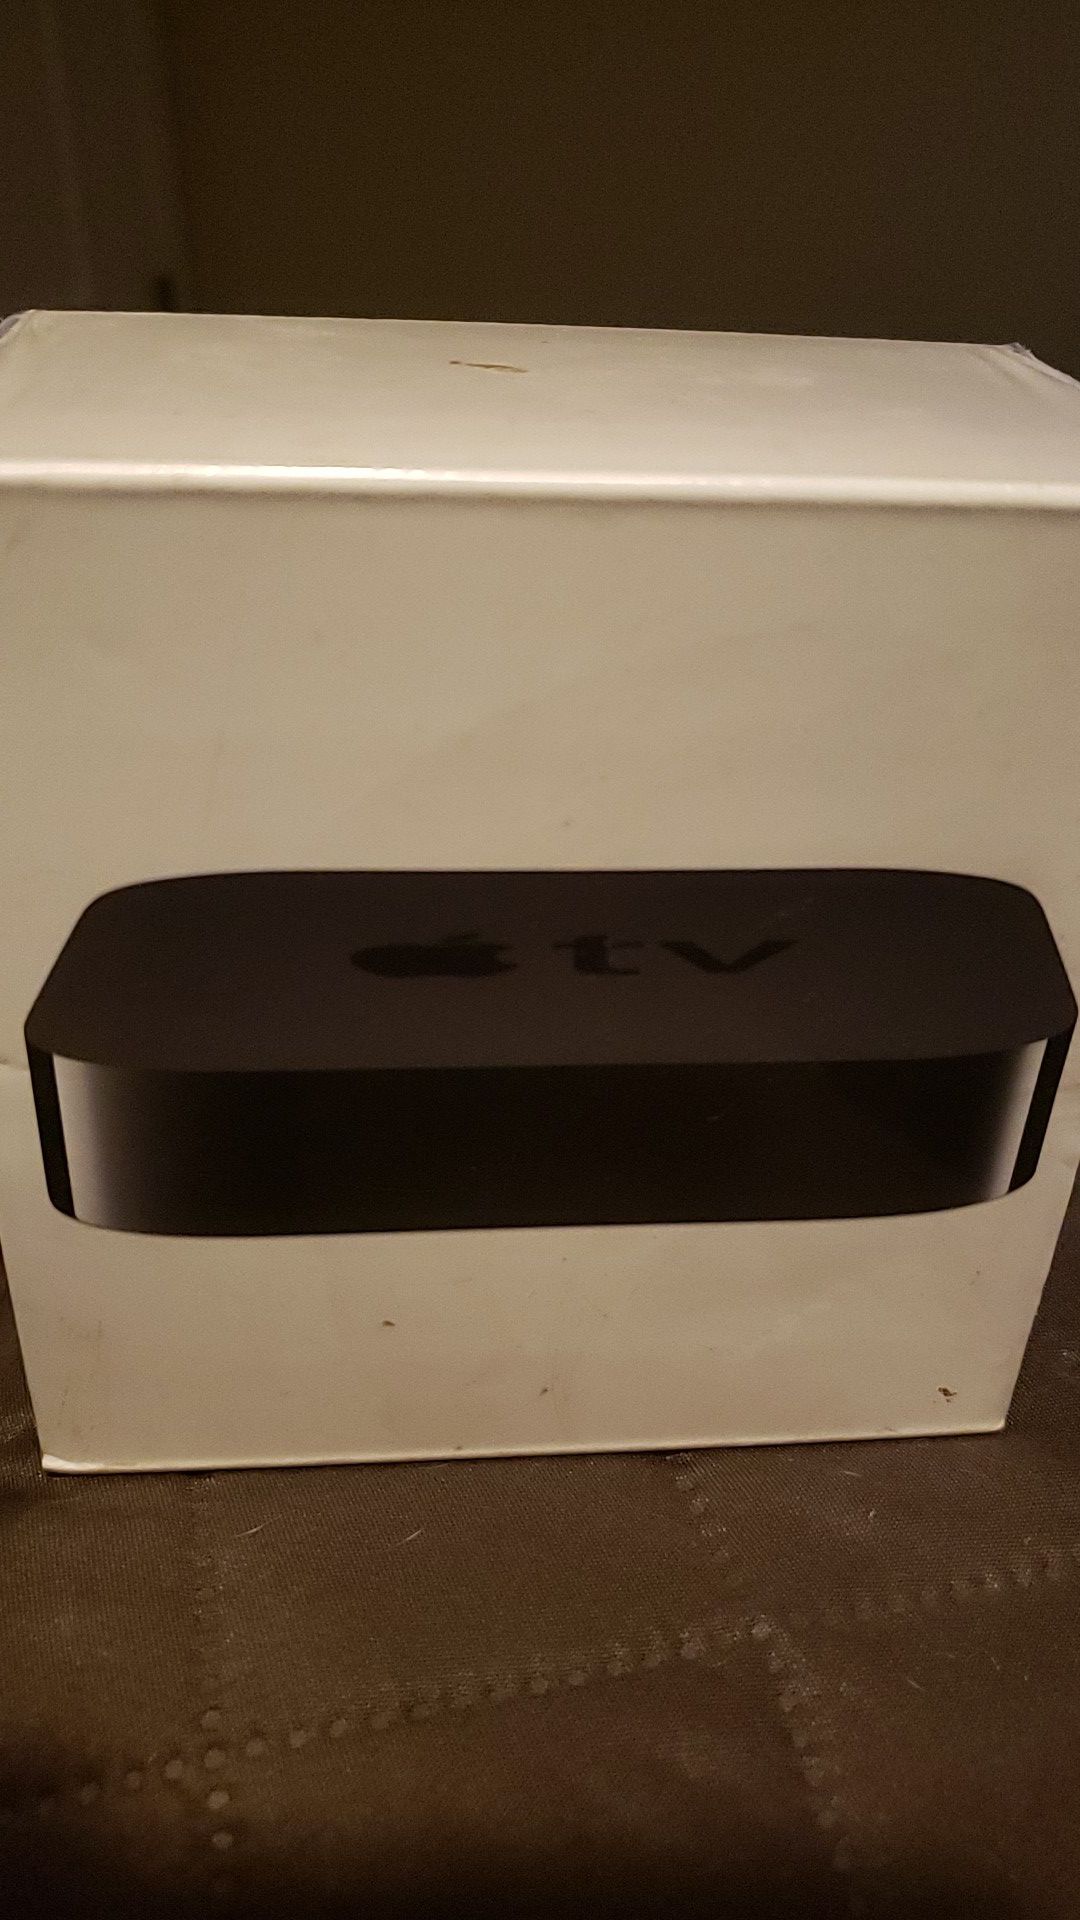 Apple TV Third Generation - Brand New